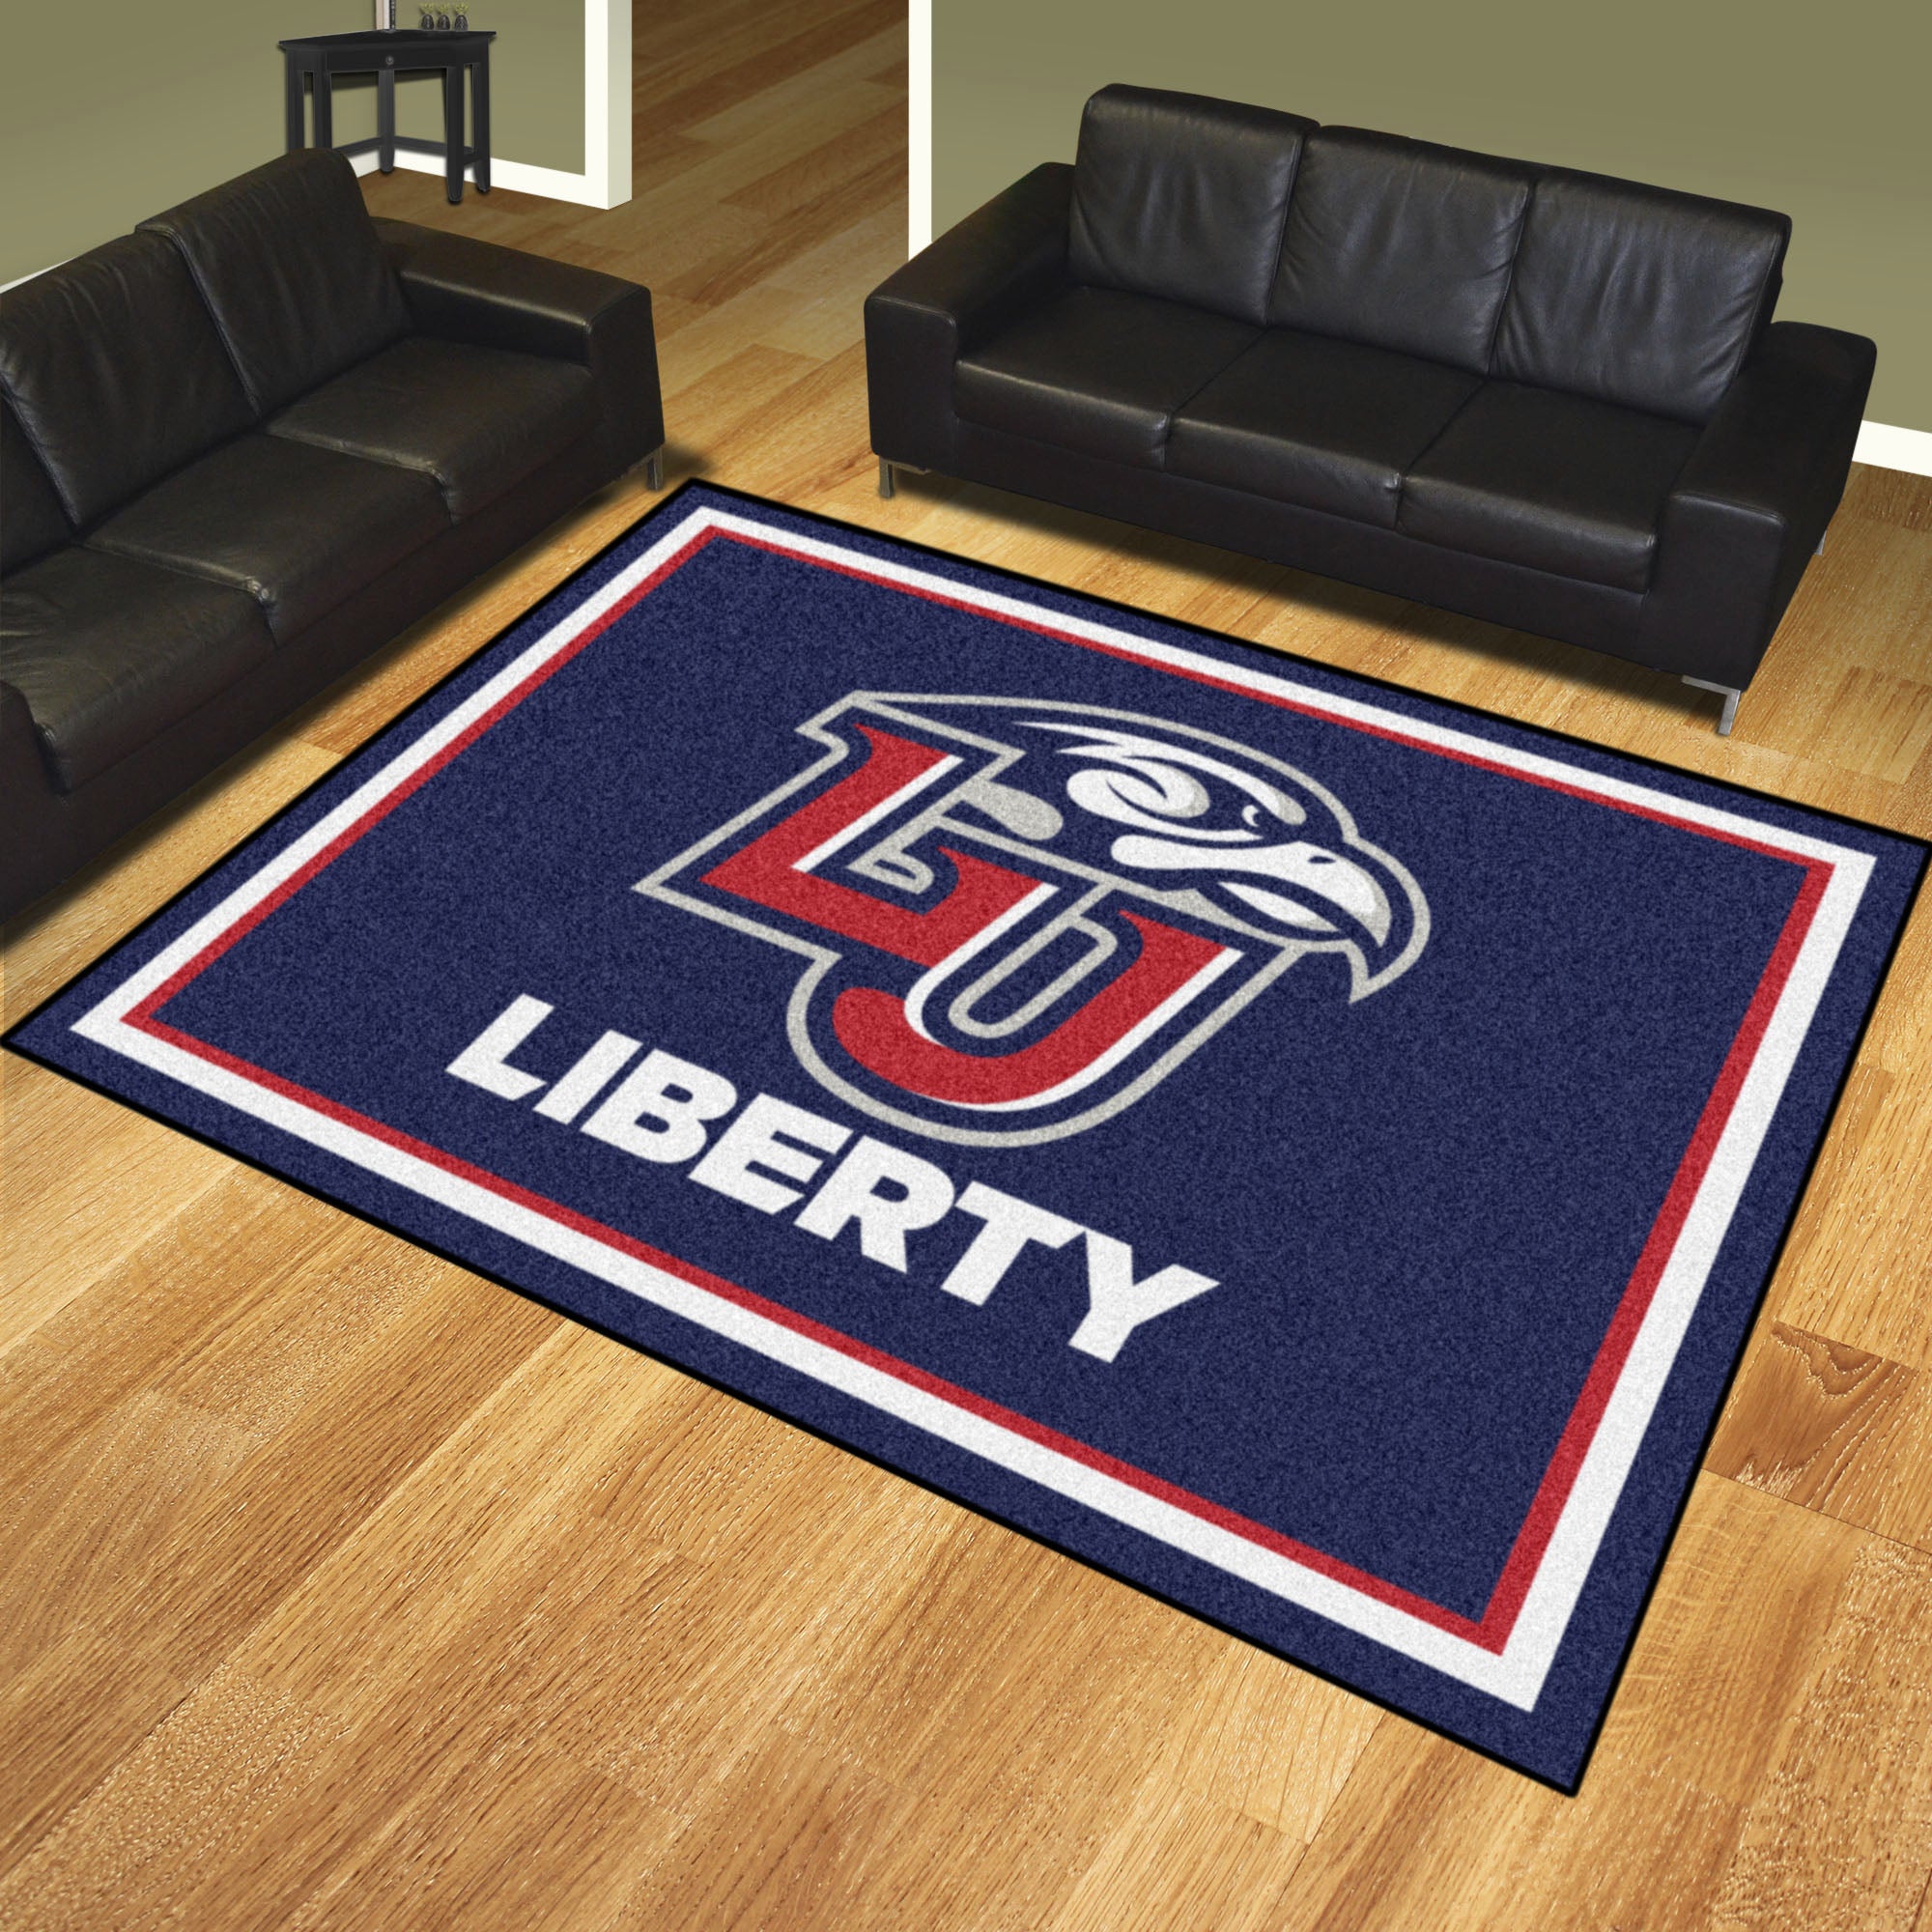 Liberty University 8'x10' Rug